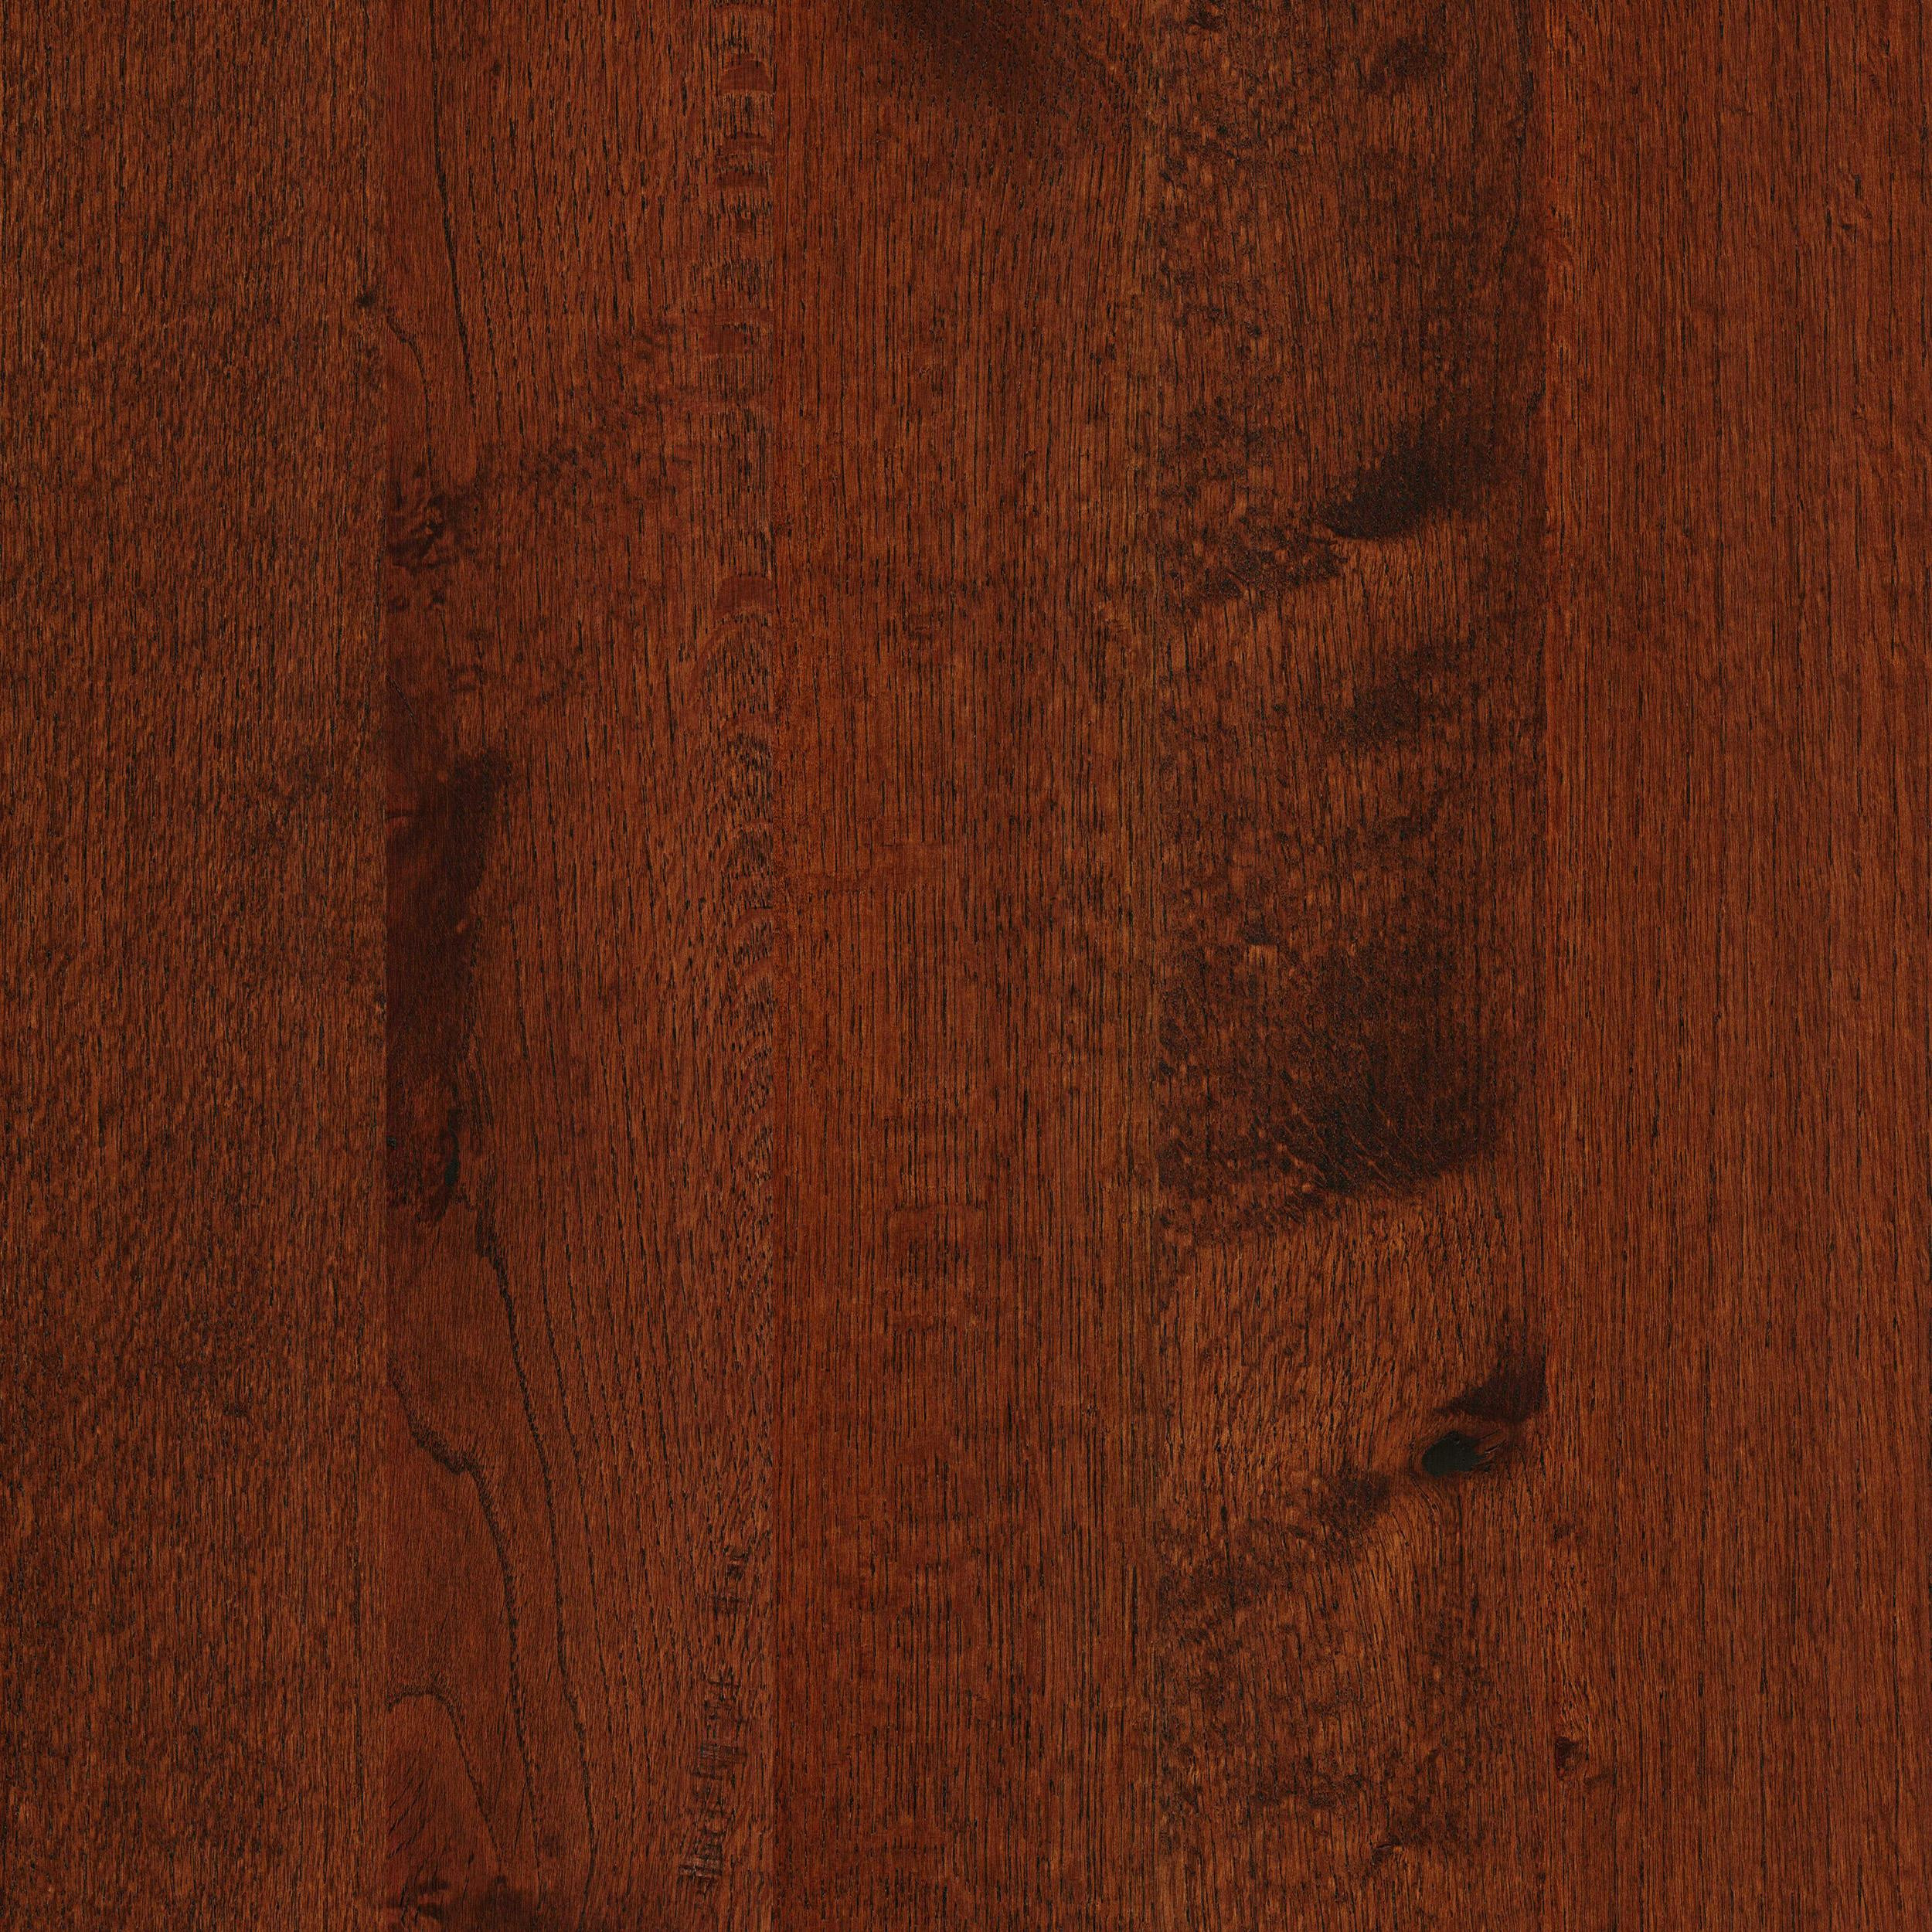 3 4 inch unfinished oak hardwood flooring of timber hardwood red oak sorrell 5 wide solid hardwood flooring within red oak sorrell timber solid approved bk